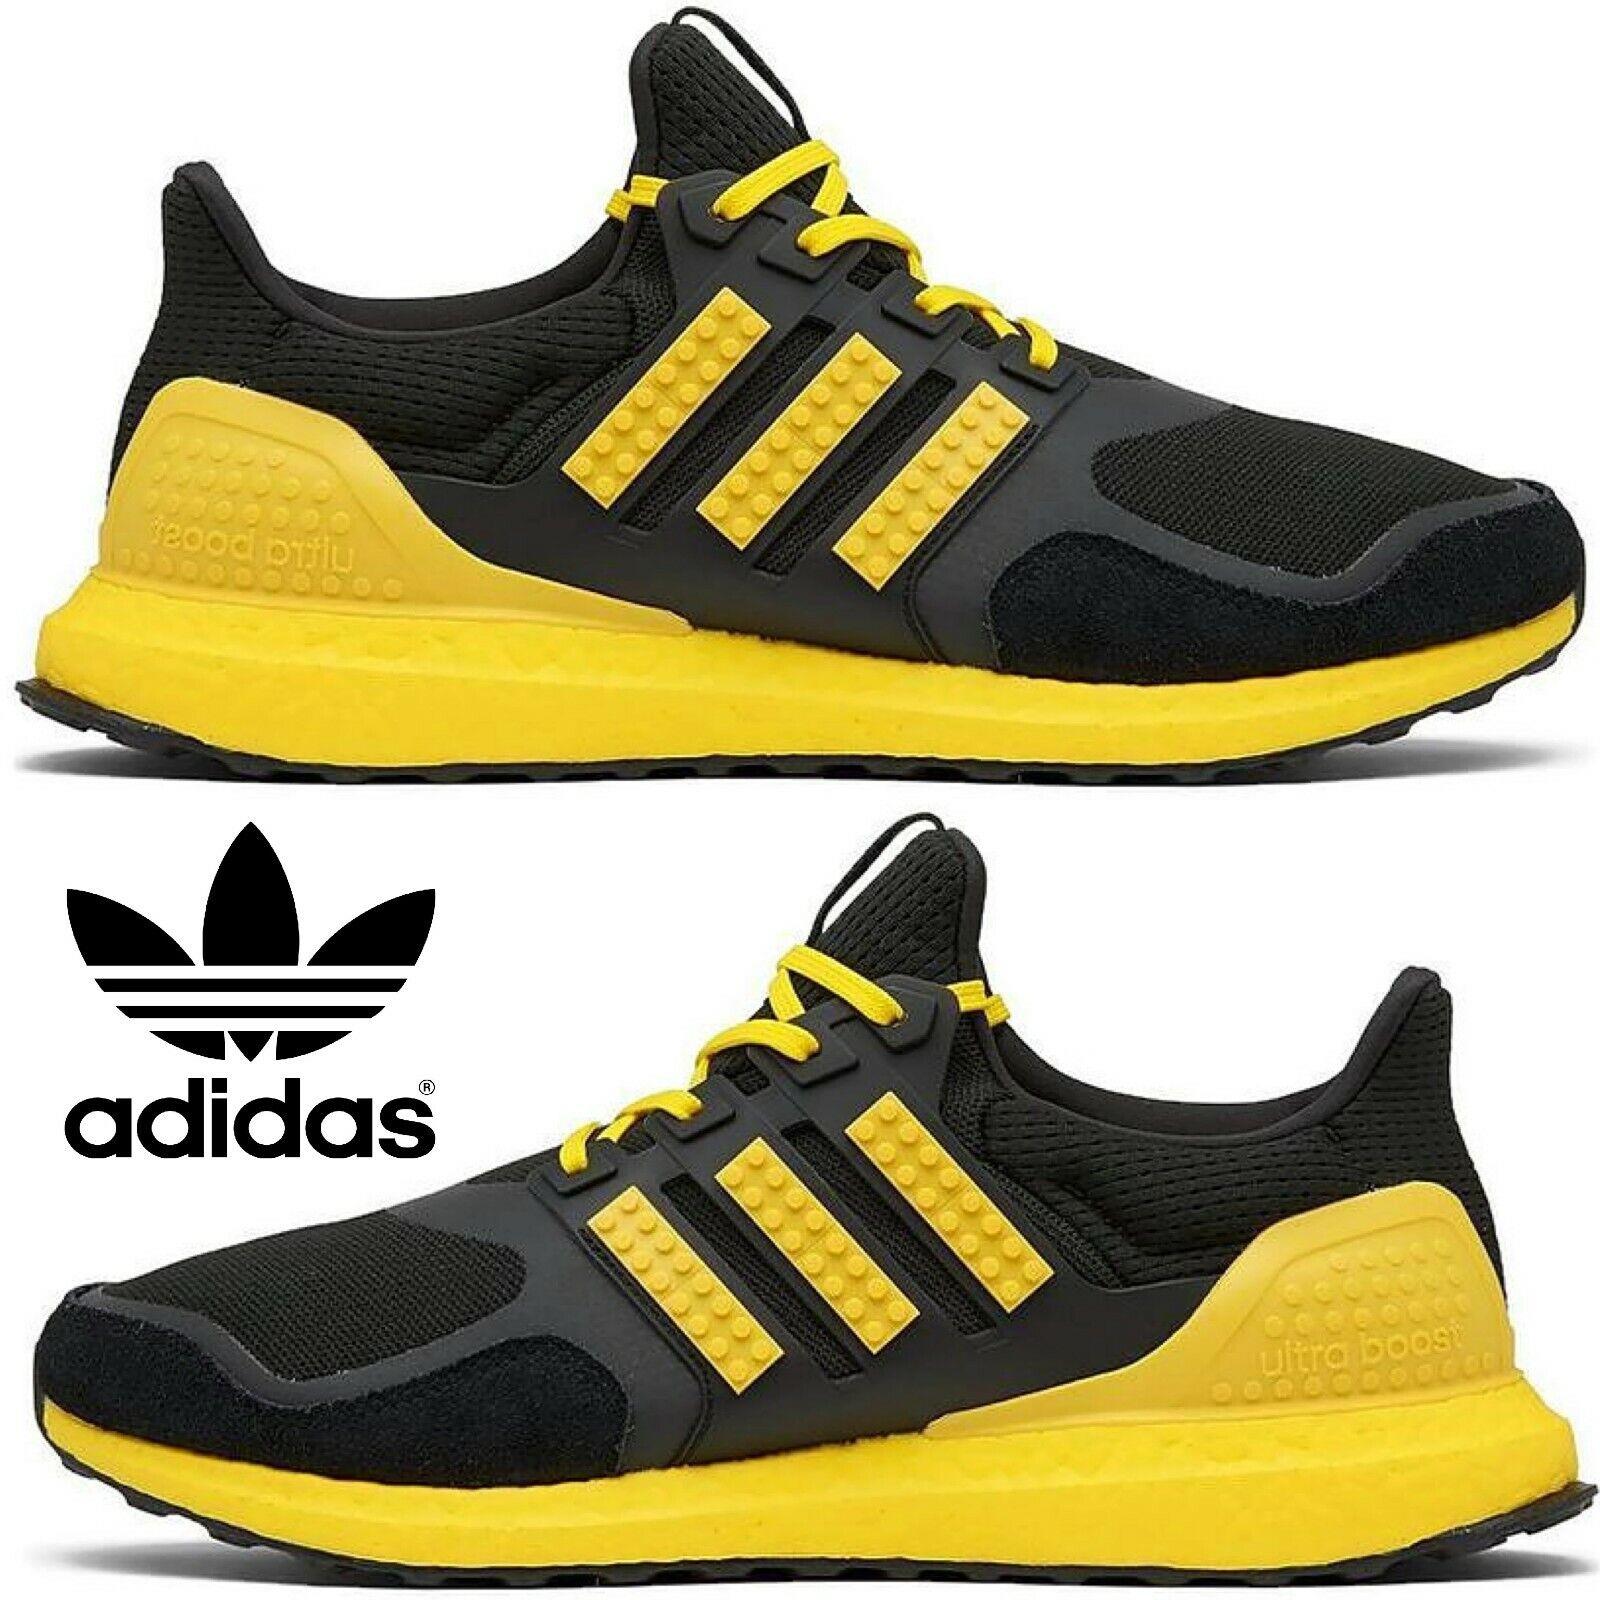 Adidas x Lego Ultraboost Men s Sneakers Shoes Running Sport Gym White Black - Black , Black/Yellow Manufacturer